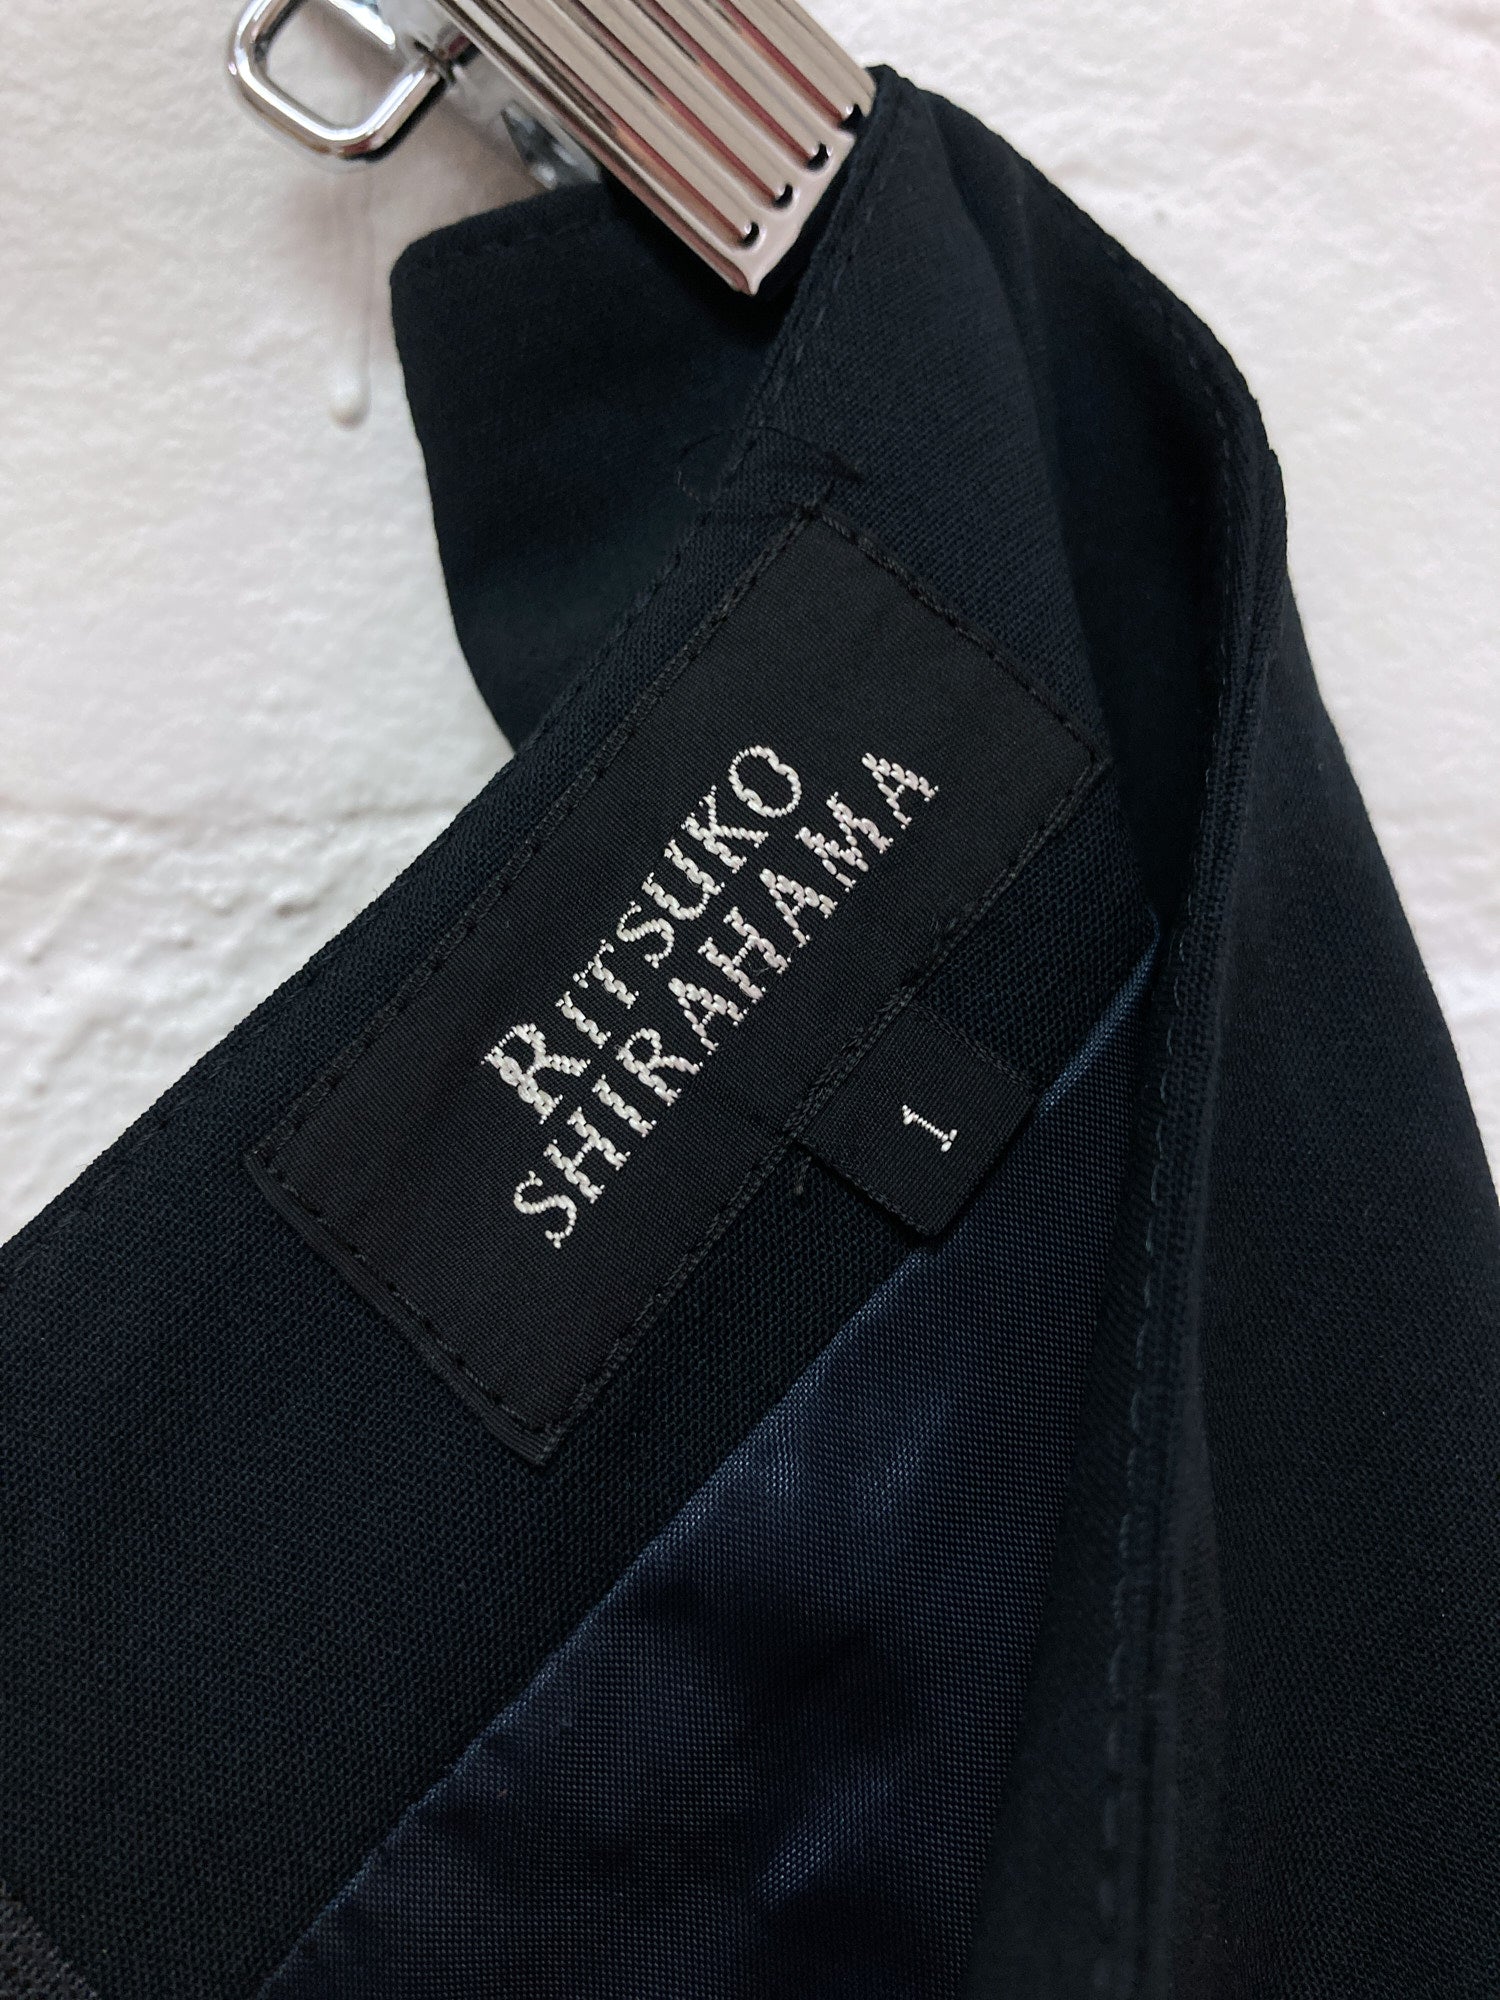 Ritsuko Shirahama dark navy wool rayon asymmetrical skirt - 1 S